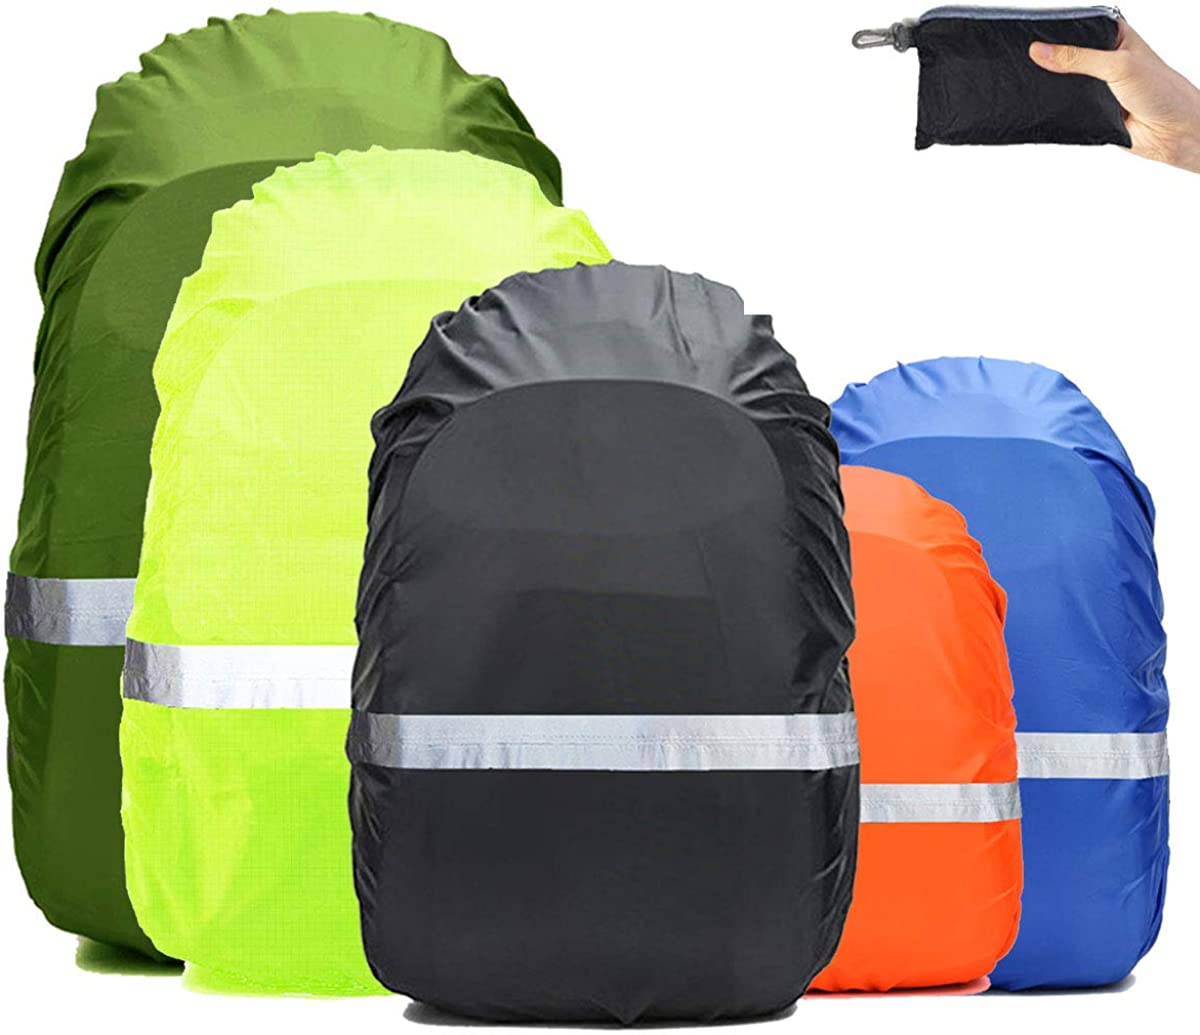 Backpacks with rain covers.